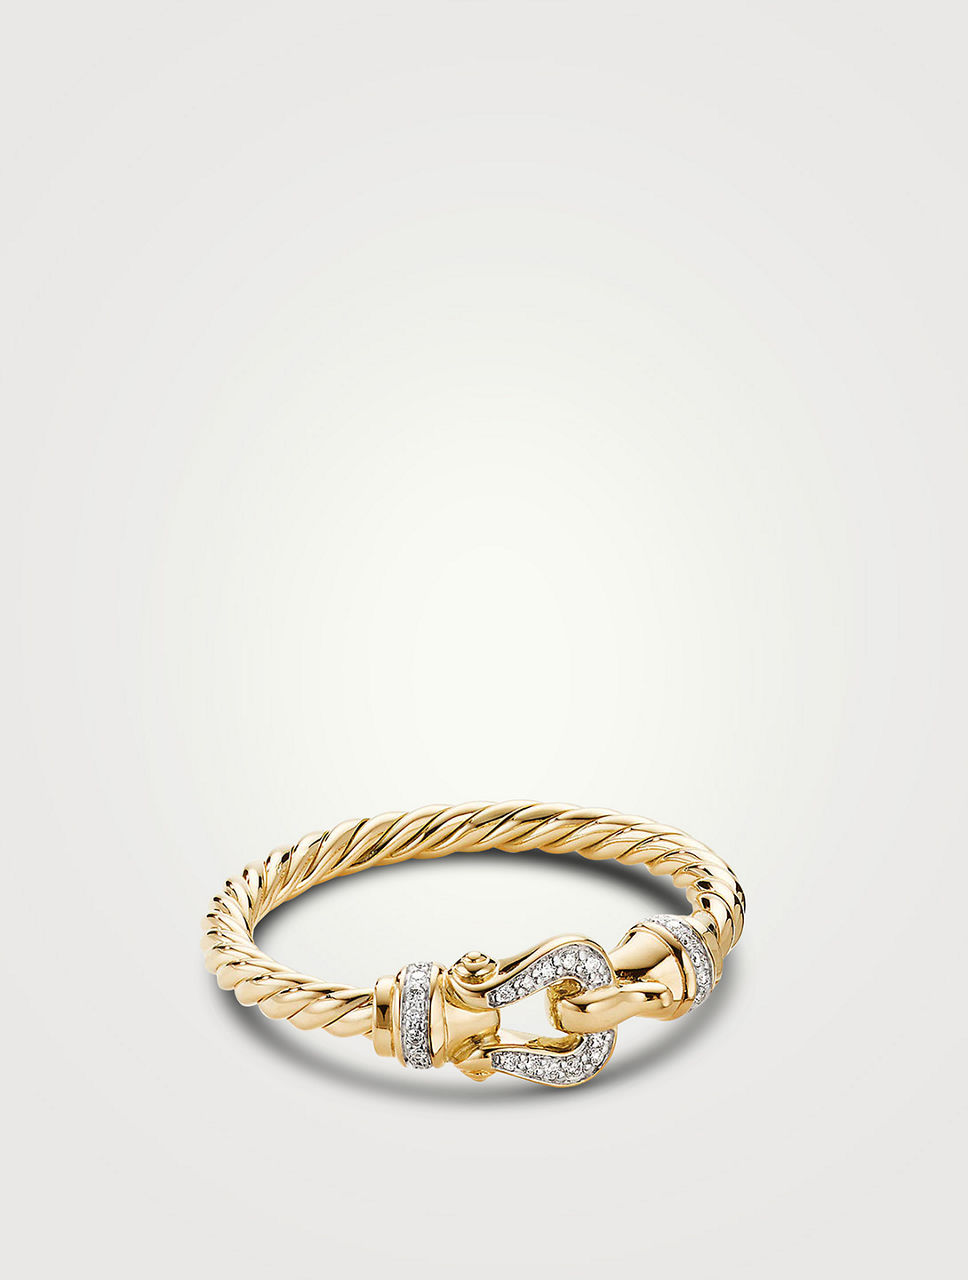 Petite Buckle Ring 18k Yellow Gold With Pavé Diamonds